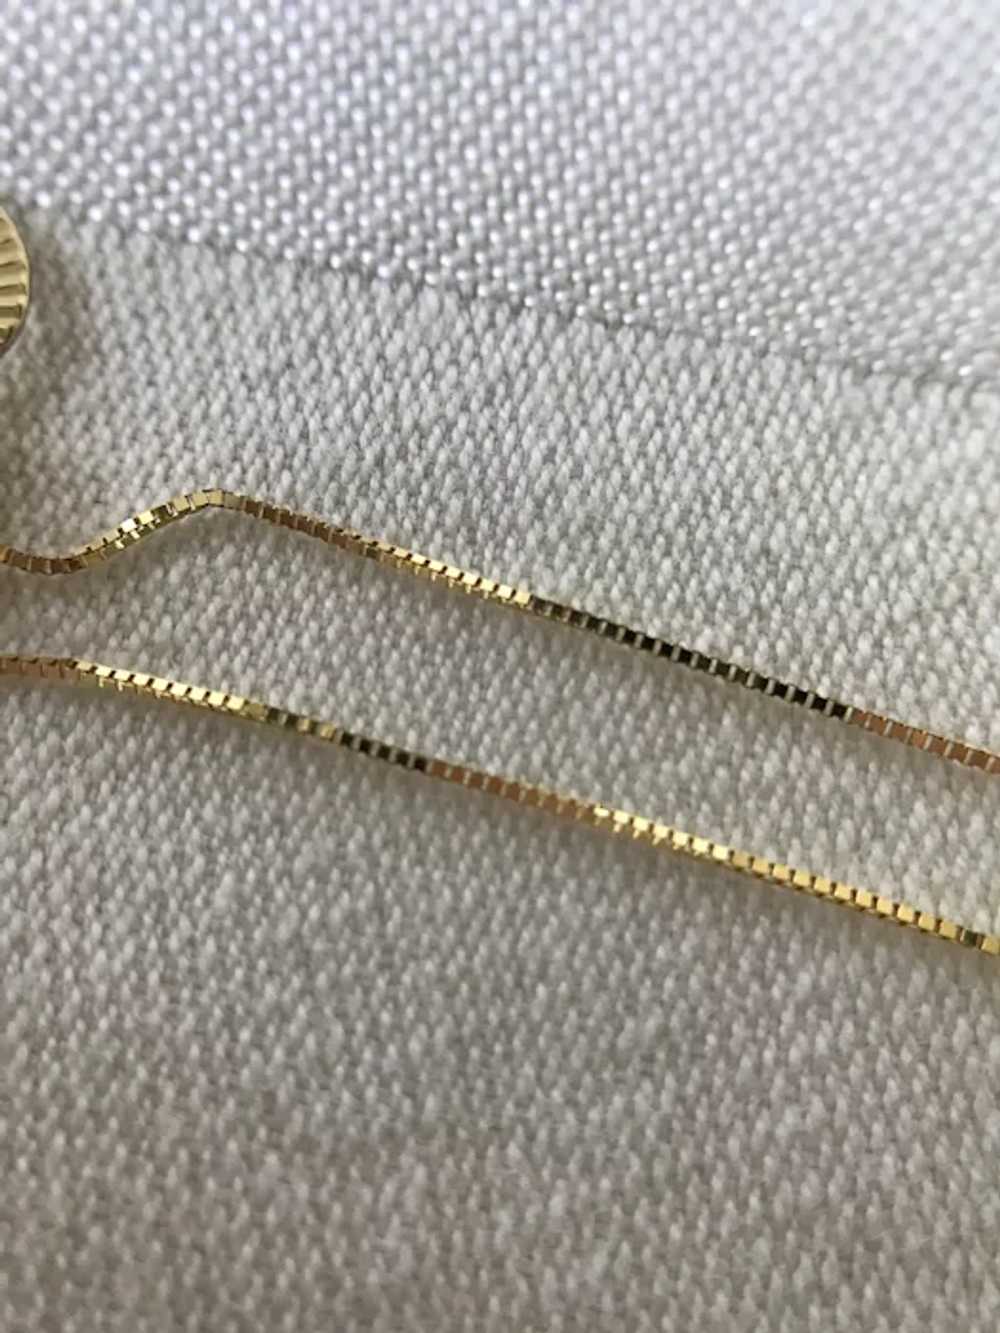 Etched 14K Gold Heart Pendant Necklace - image 3